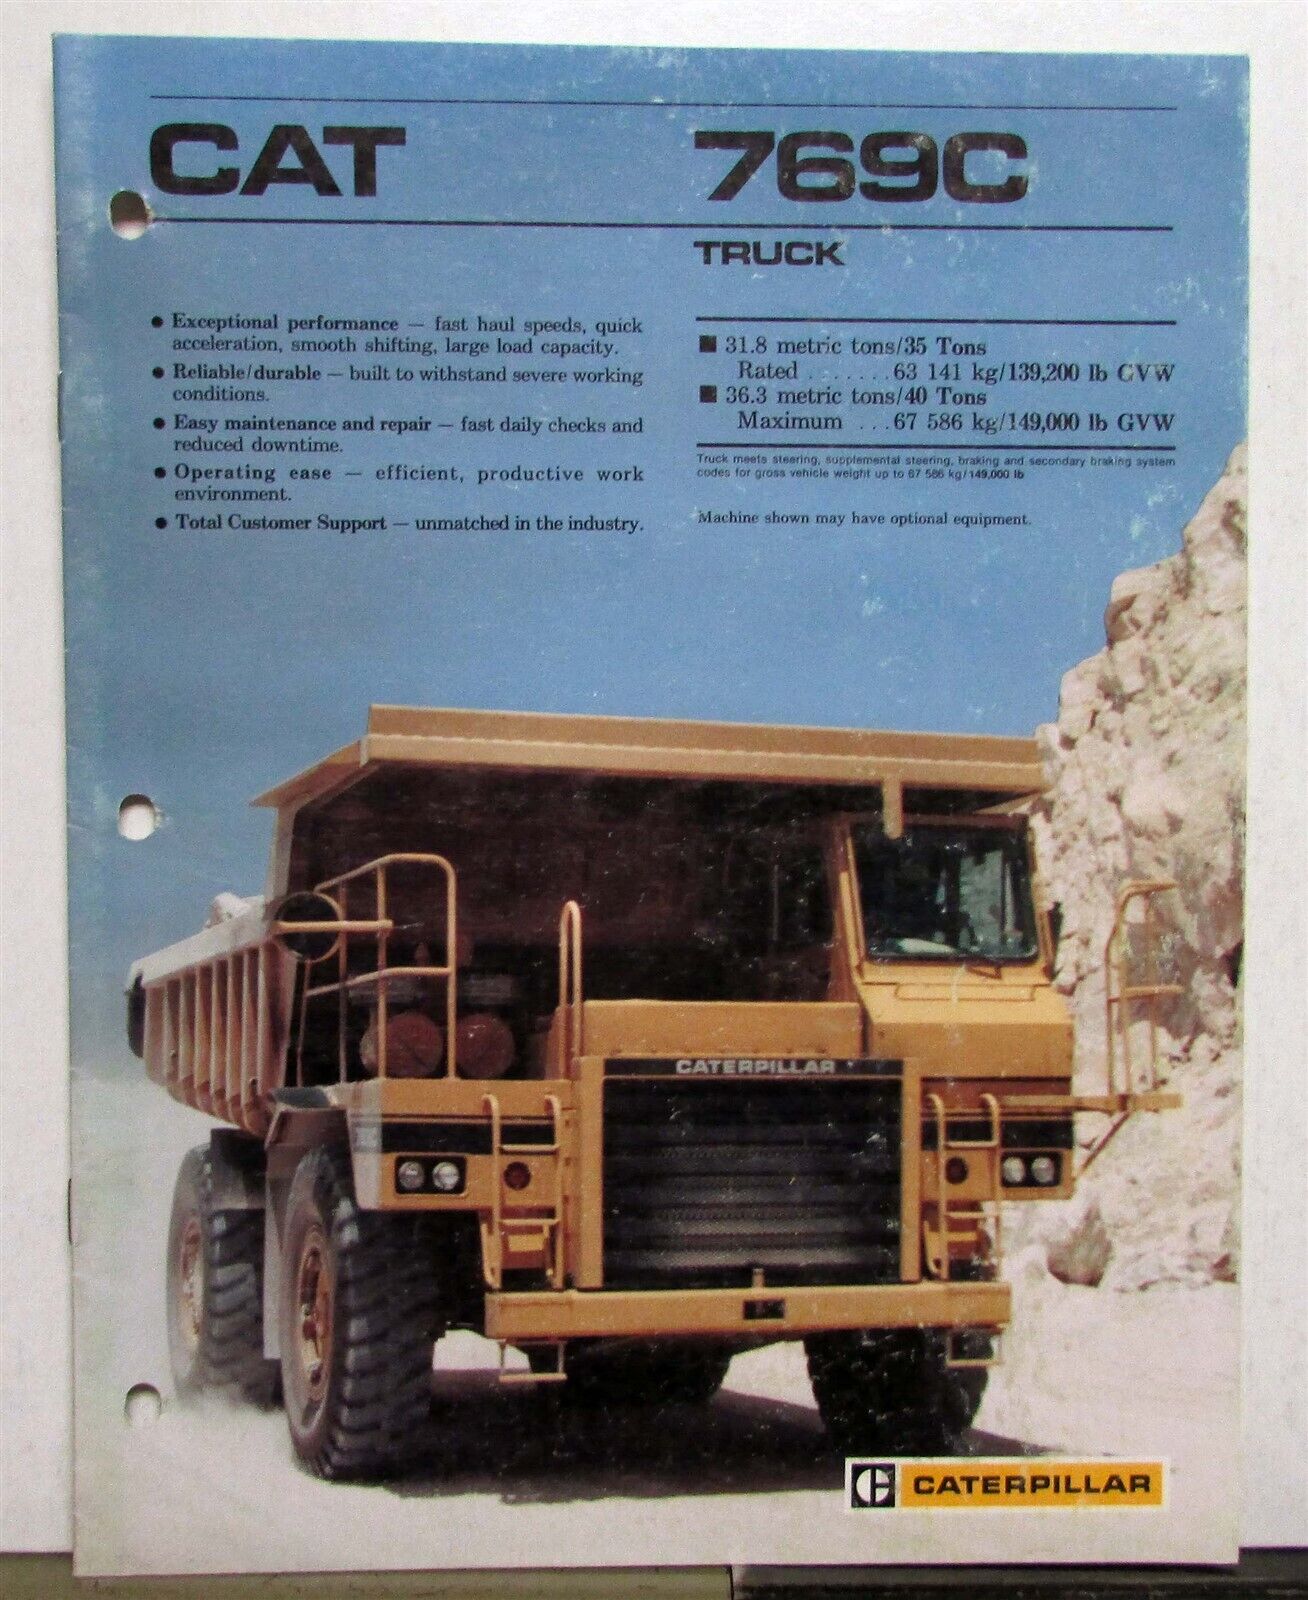 1988 CAT 769C Truck Construction Specifications Sales Brochure